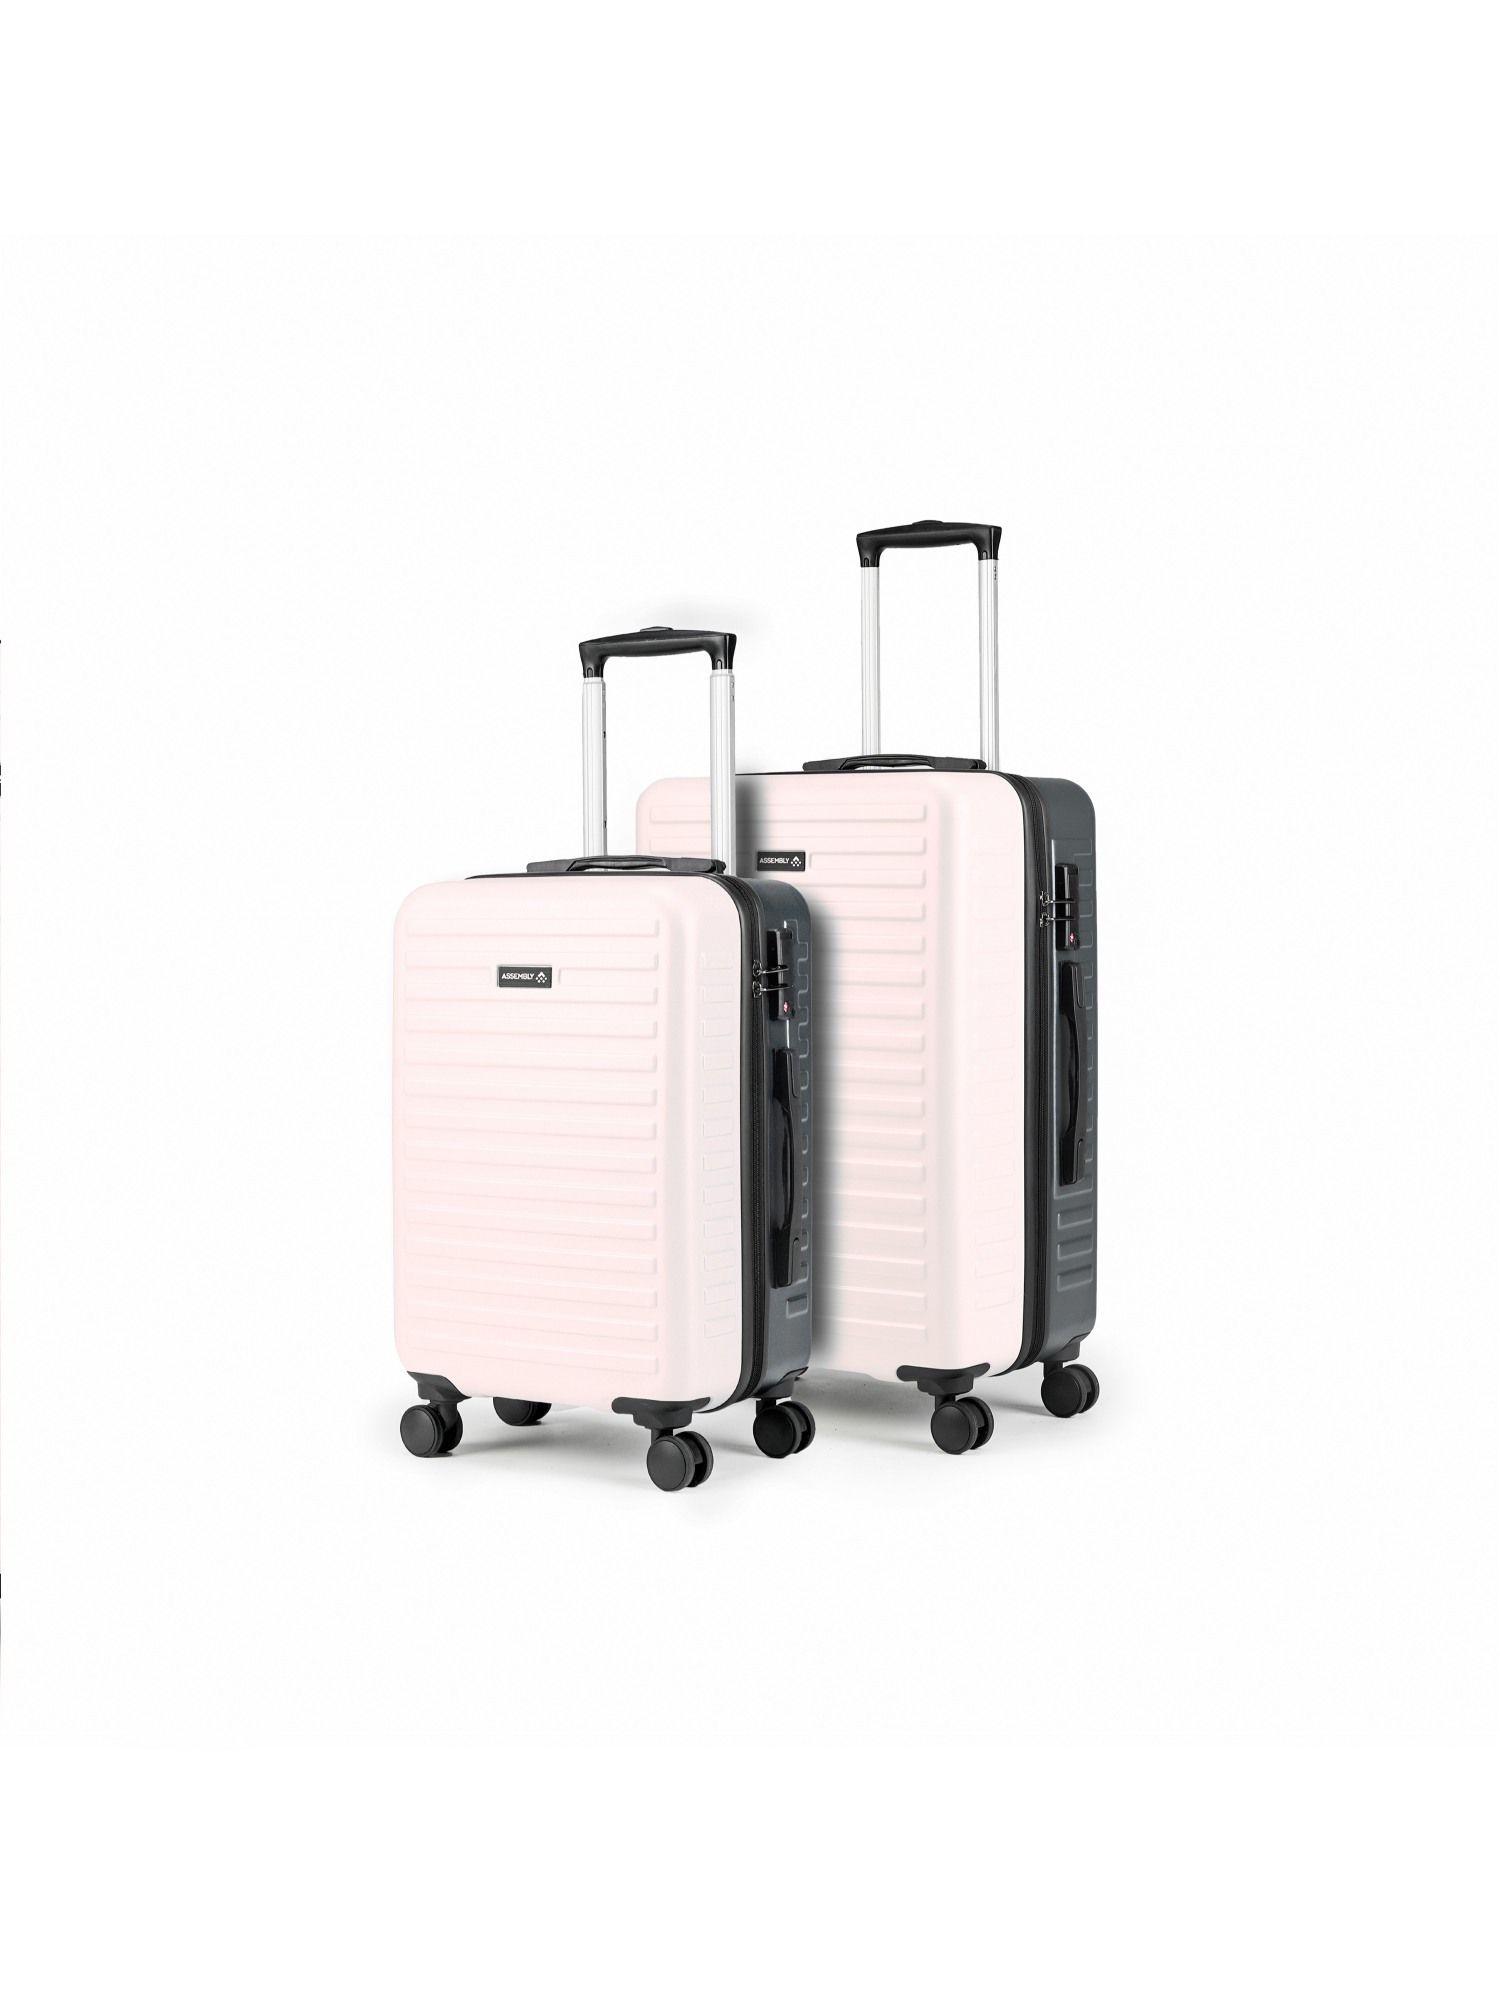 hard luggage set of 2 medium check - in & cabin trolley - ivory & grey